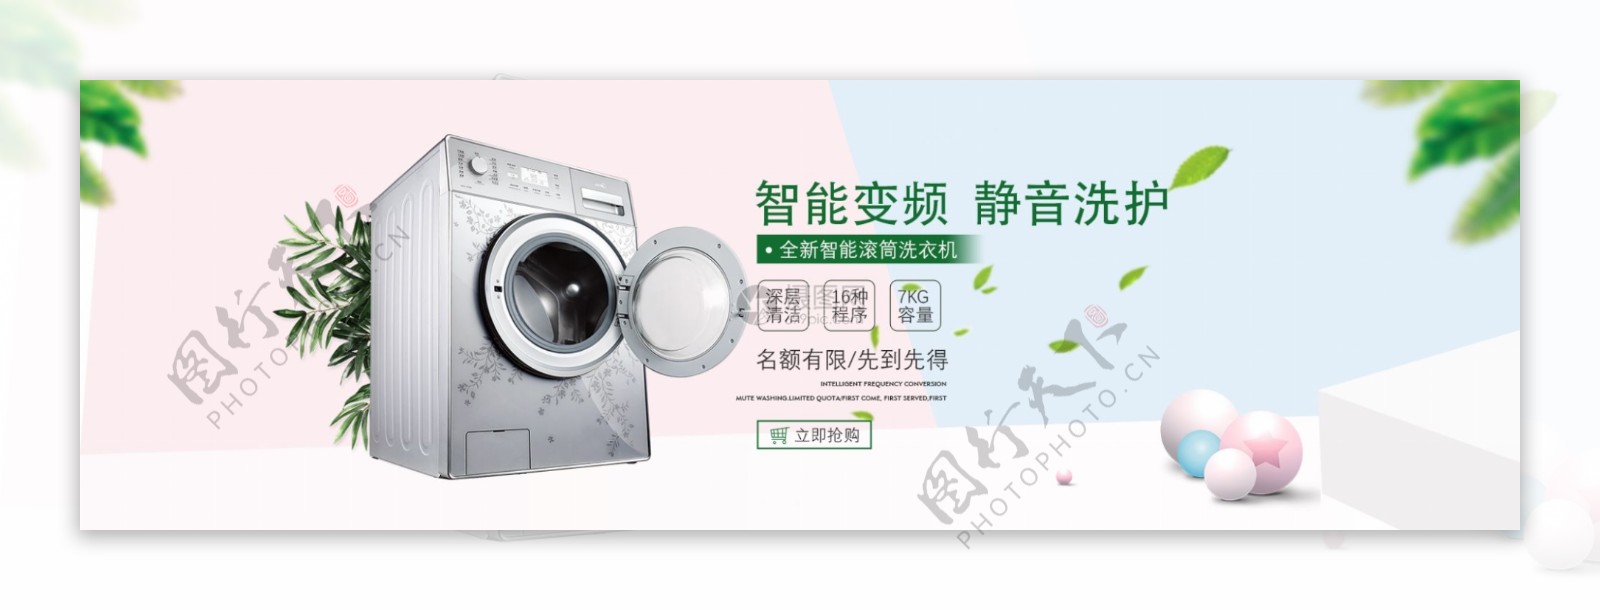 智能变频洗衣机电器促销淘宝banner